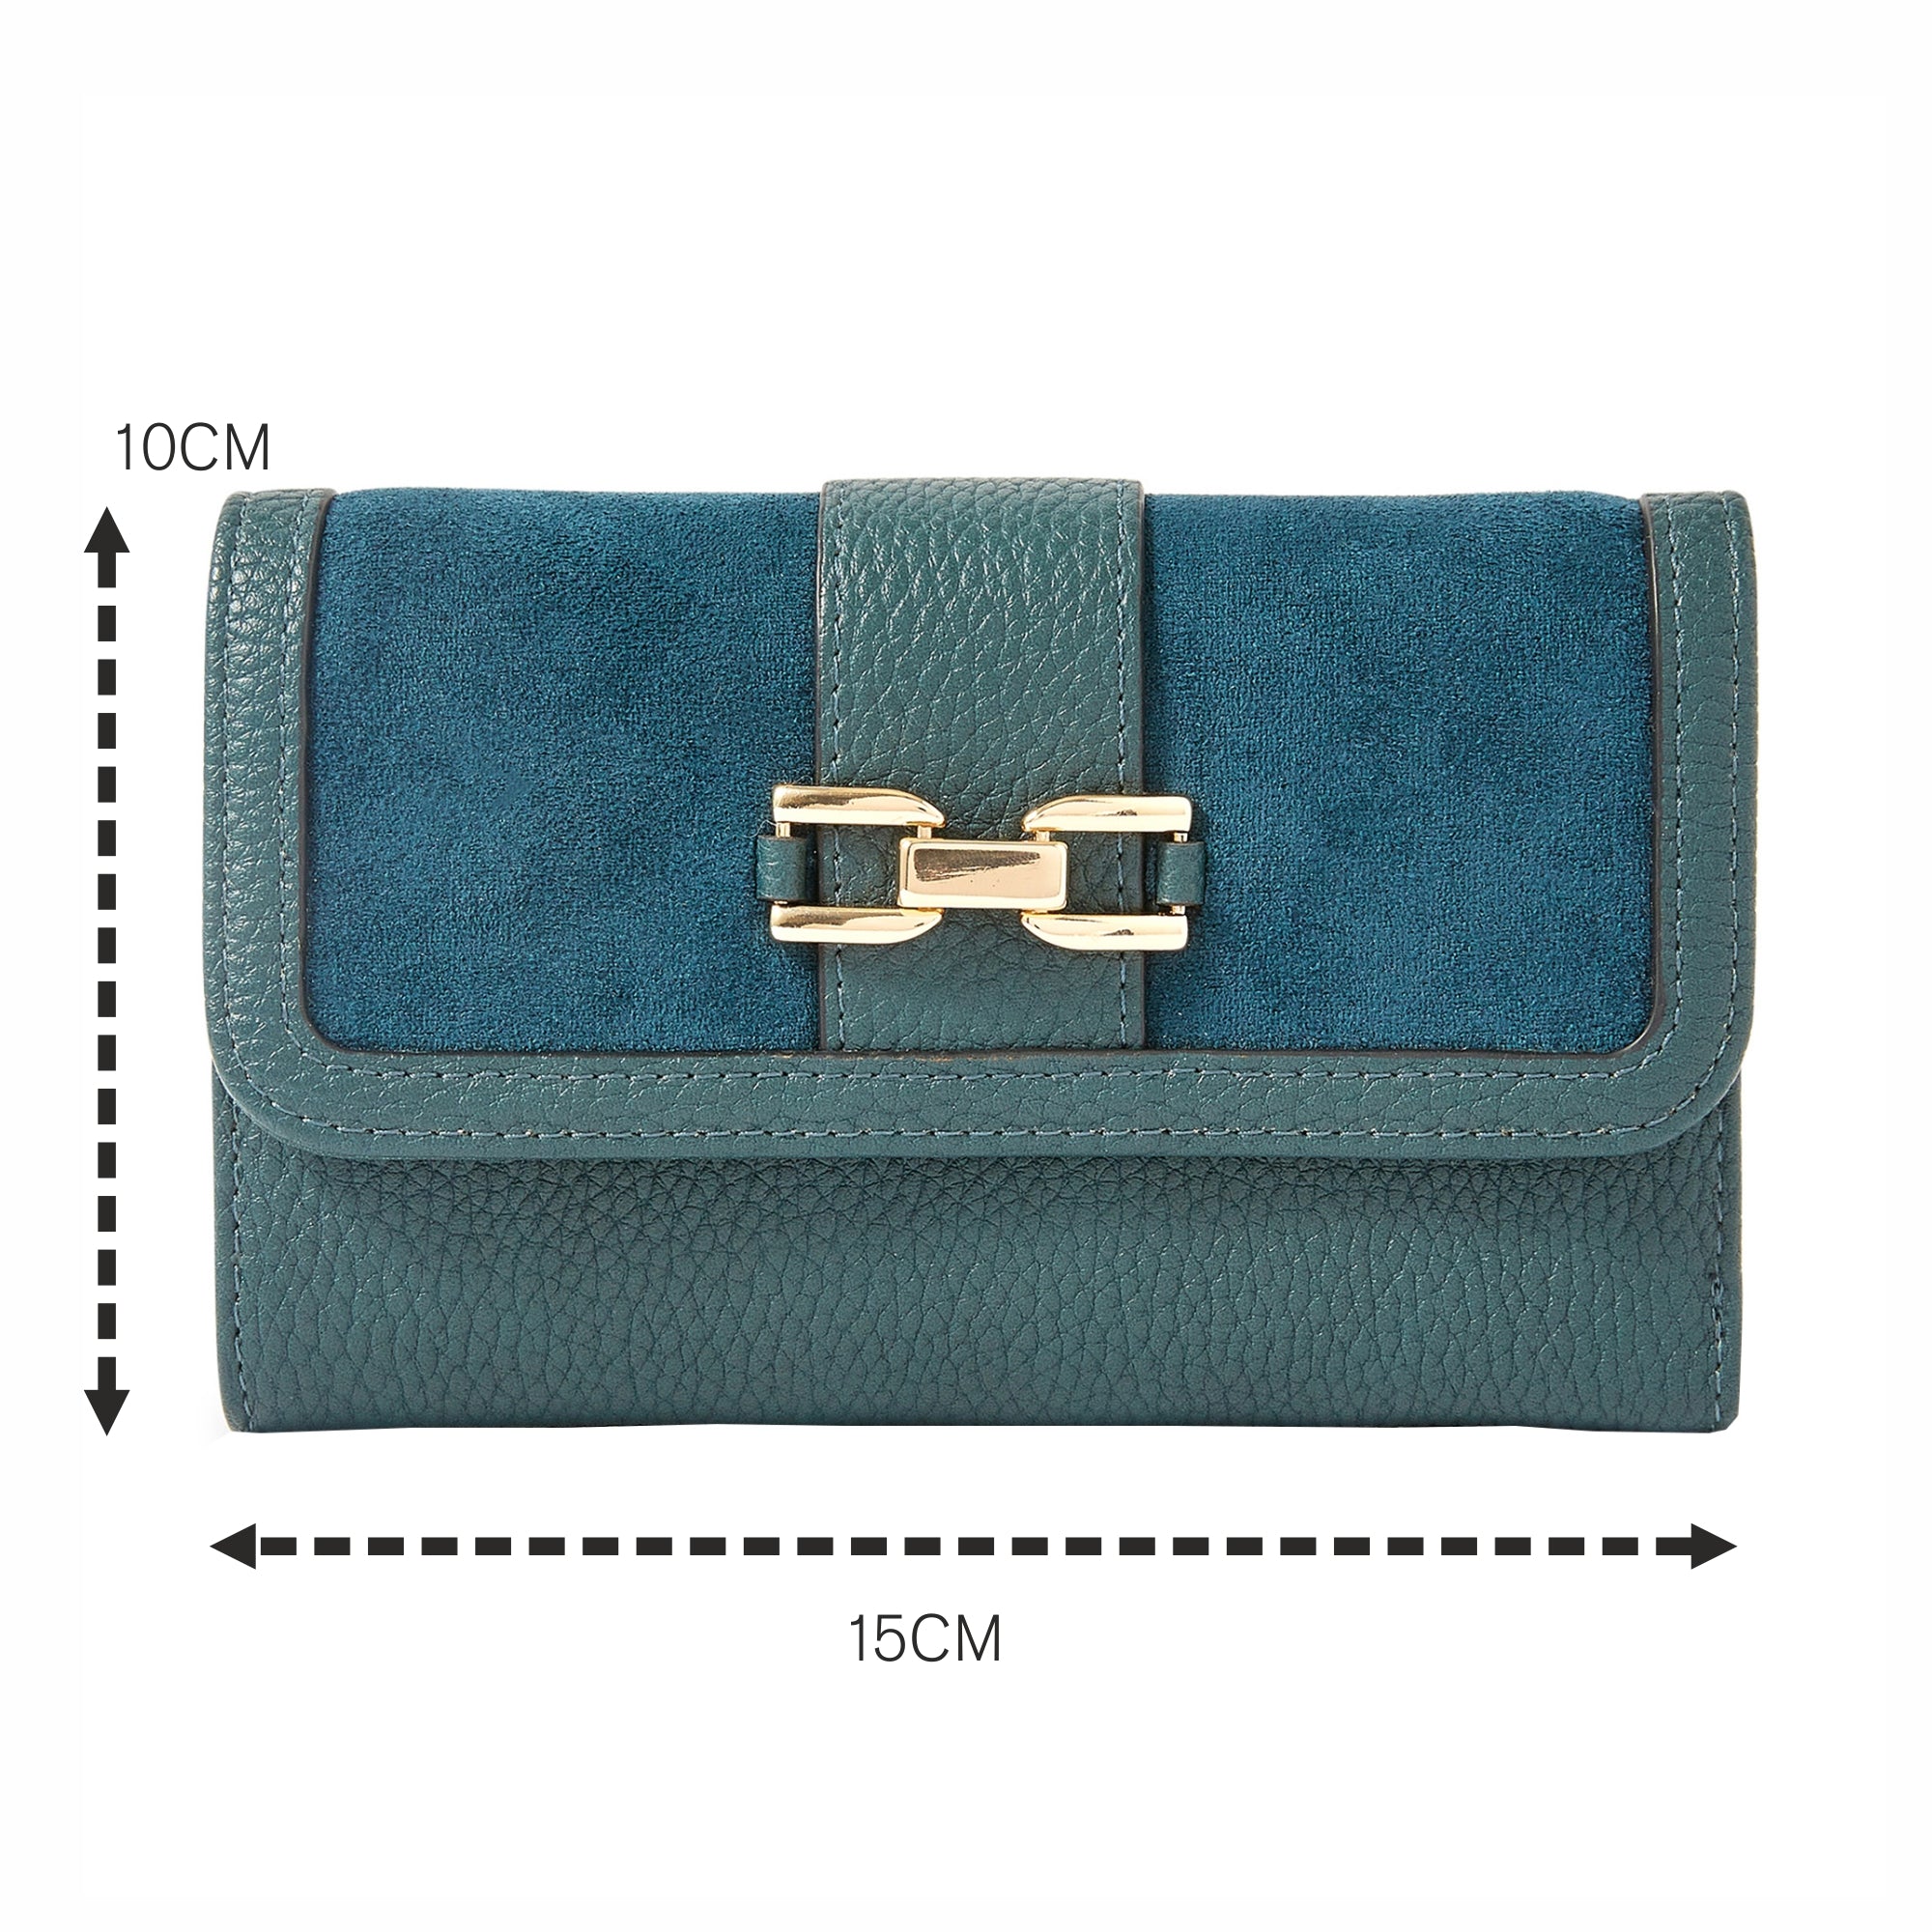 Buy LaFille Women's Handbag | Tote Bag | Ladies Purse | Combo Set of 5 Pcs  at Amazon.in